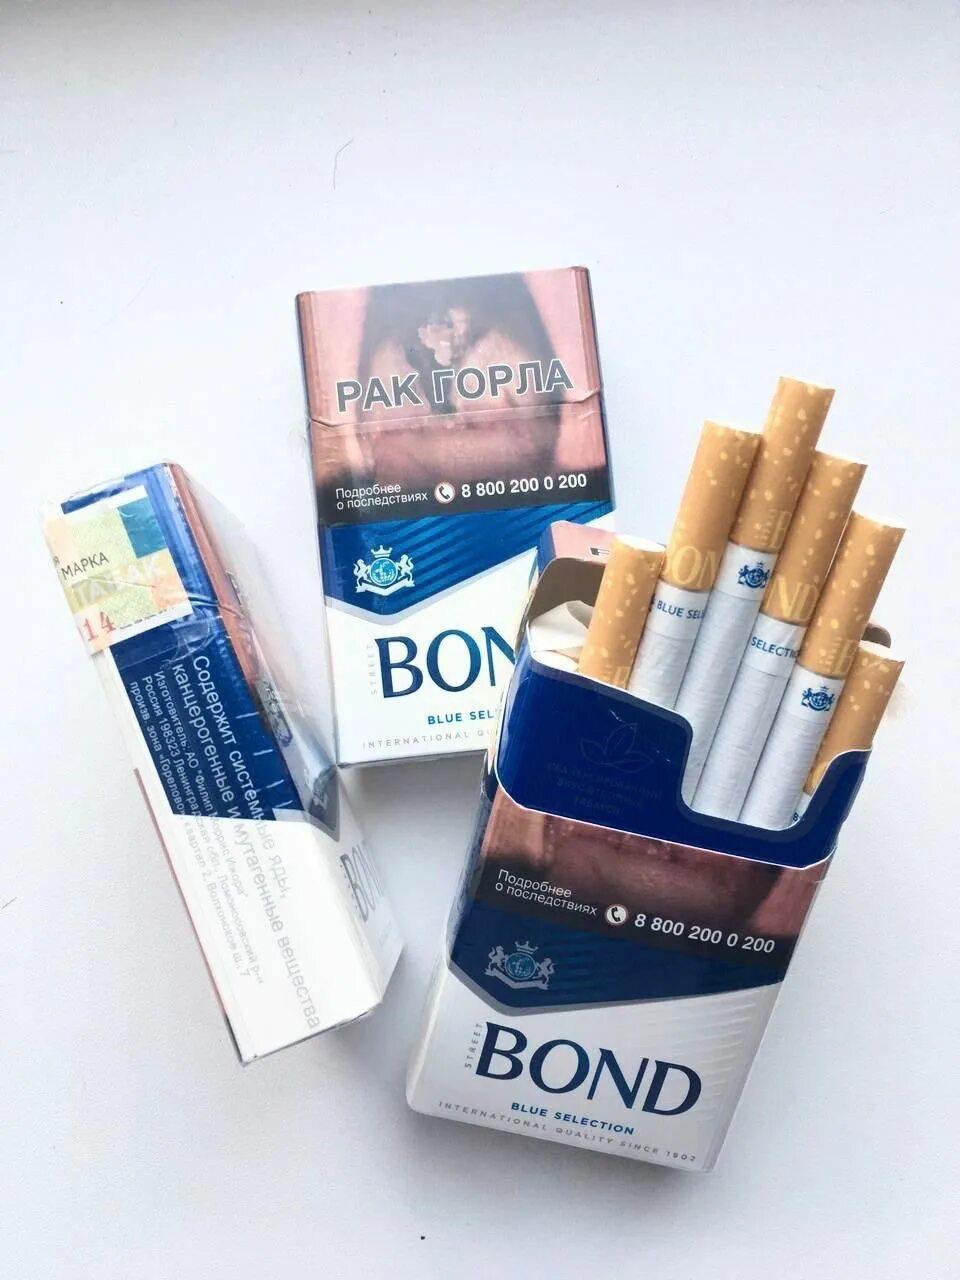 Сигареты Bond Compact Blue. Сигареты Бонд компакт синий. Сигареты мондмонд Блю компакт. Сигареты Бонд компакт Мальборо. Что значит компакт